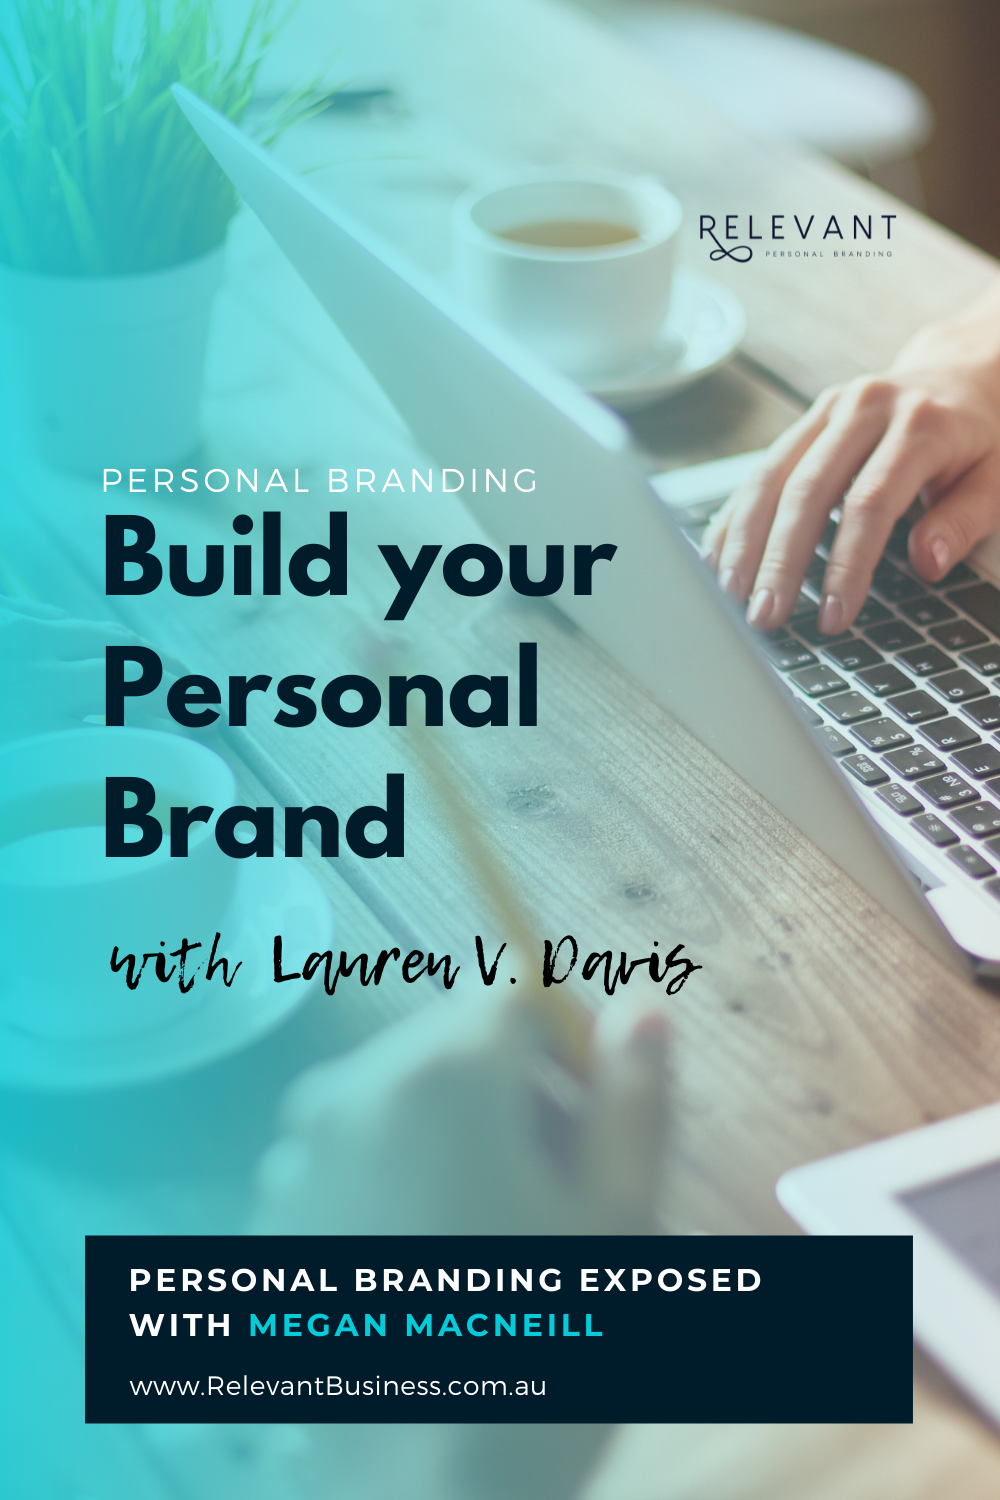 Building your Personal Brand with Lauren V. Davis